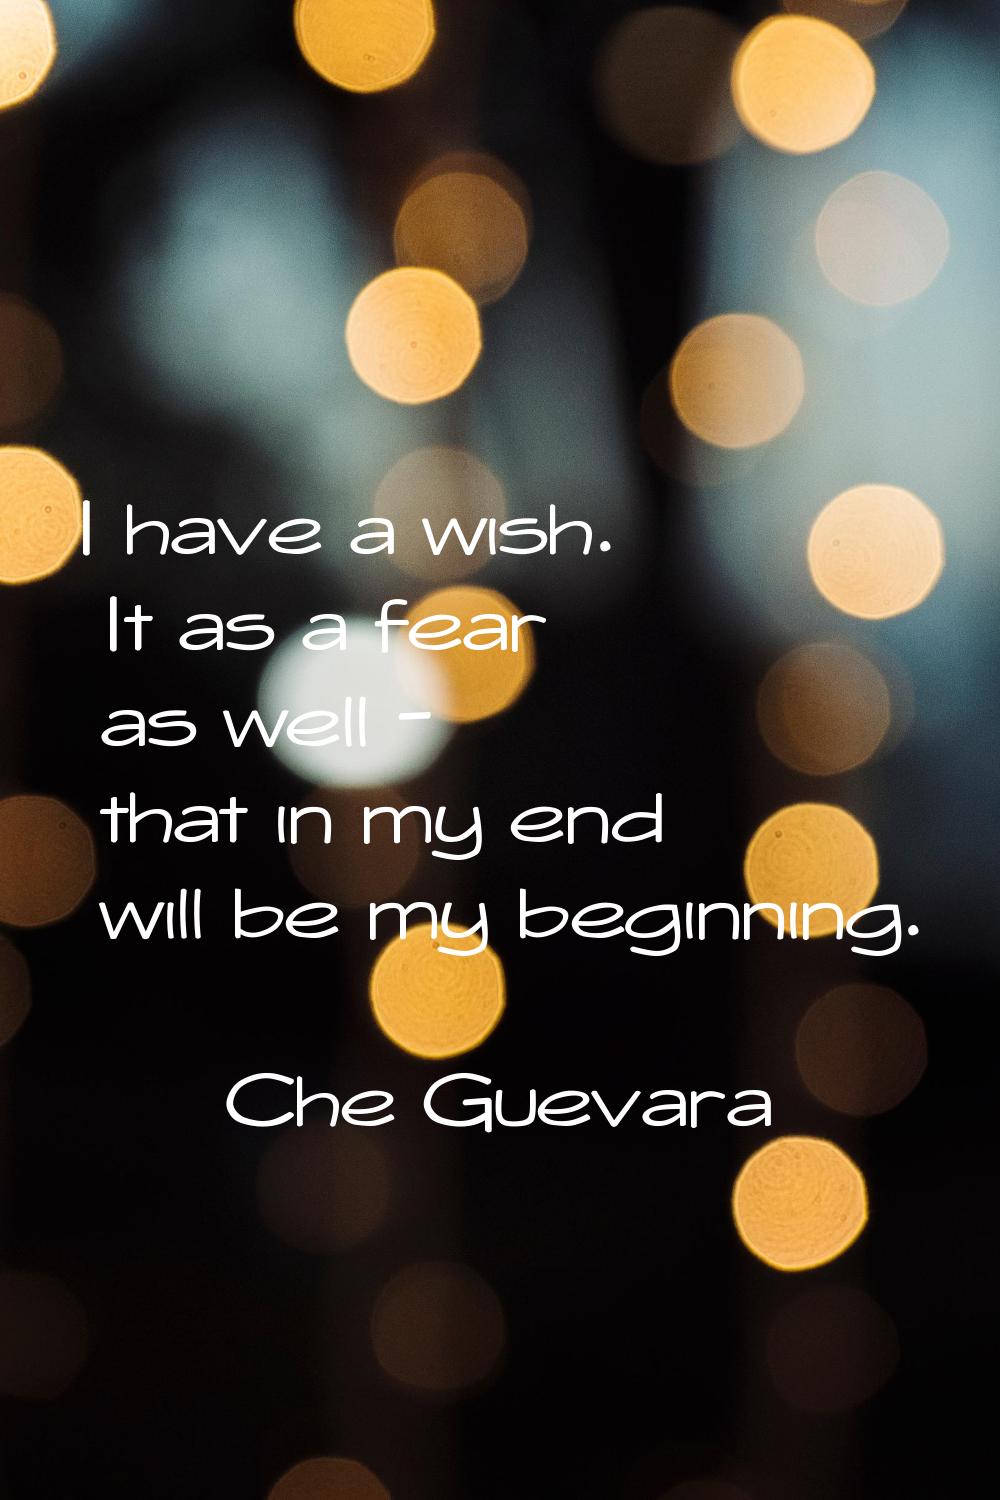 I have a wish. It as a fear as well - that in my end will be my beginning.